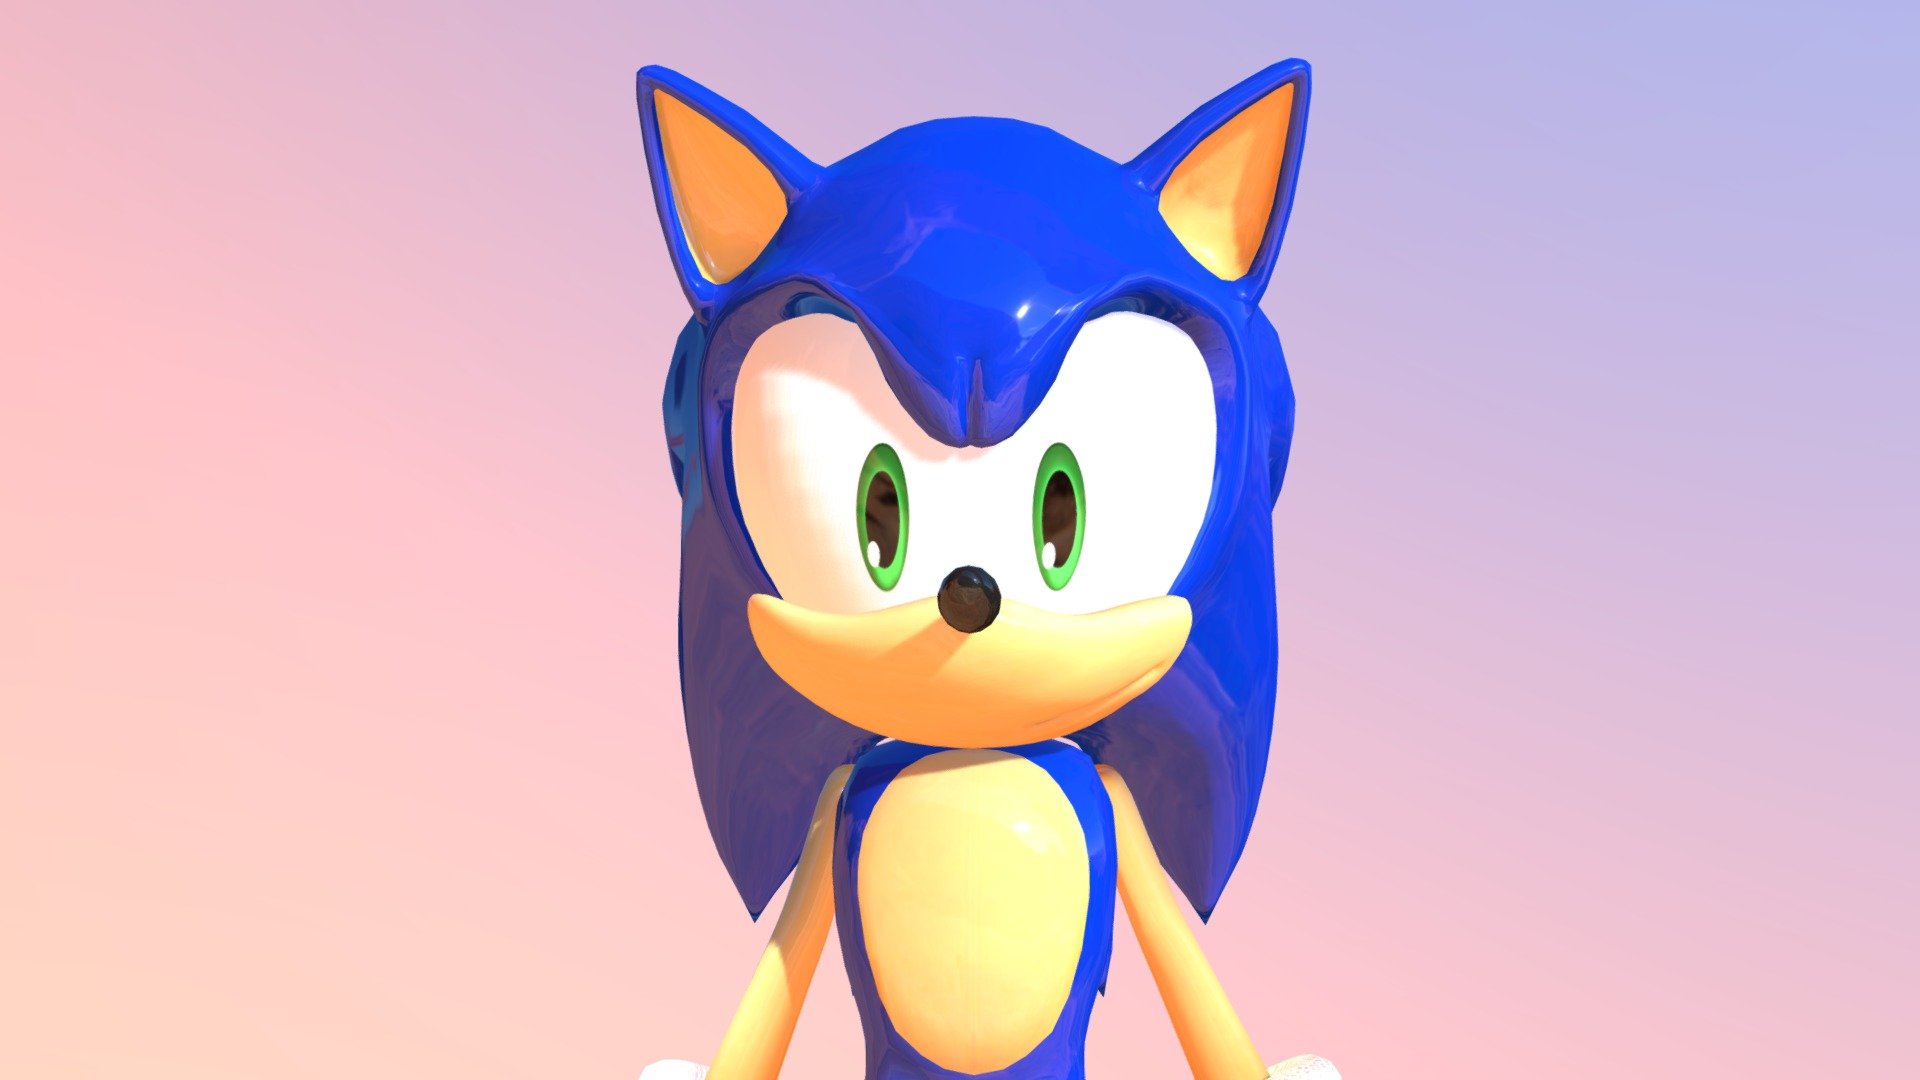 Super Sonic The Hedgehog - Download Free 3D model by HiddenMatrixYT  (@HiddenMatrixYT) [3f5b4d1]